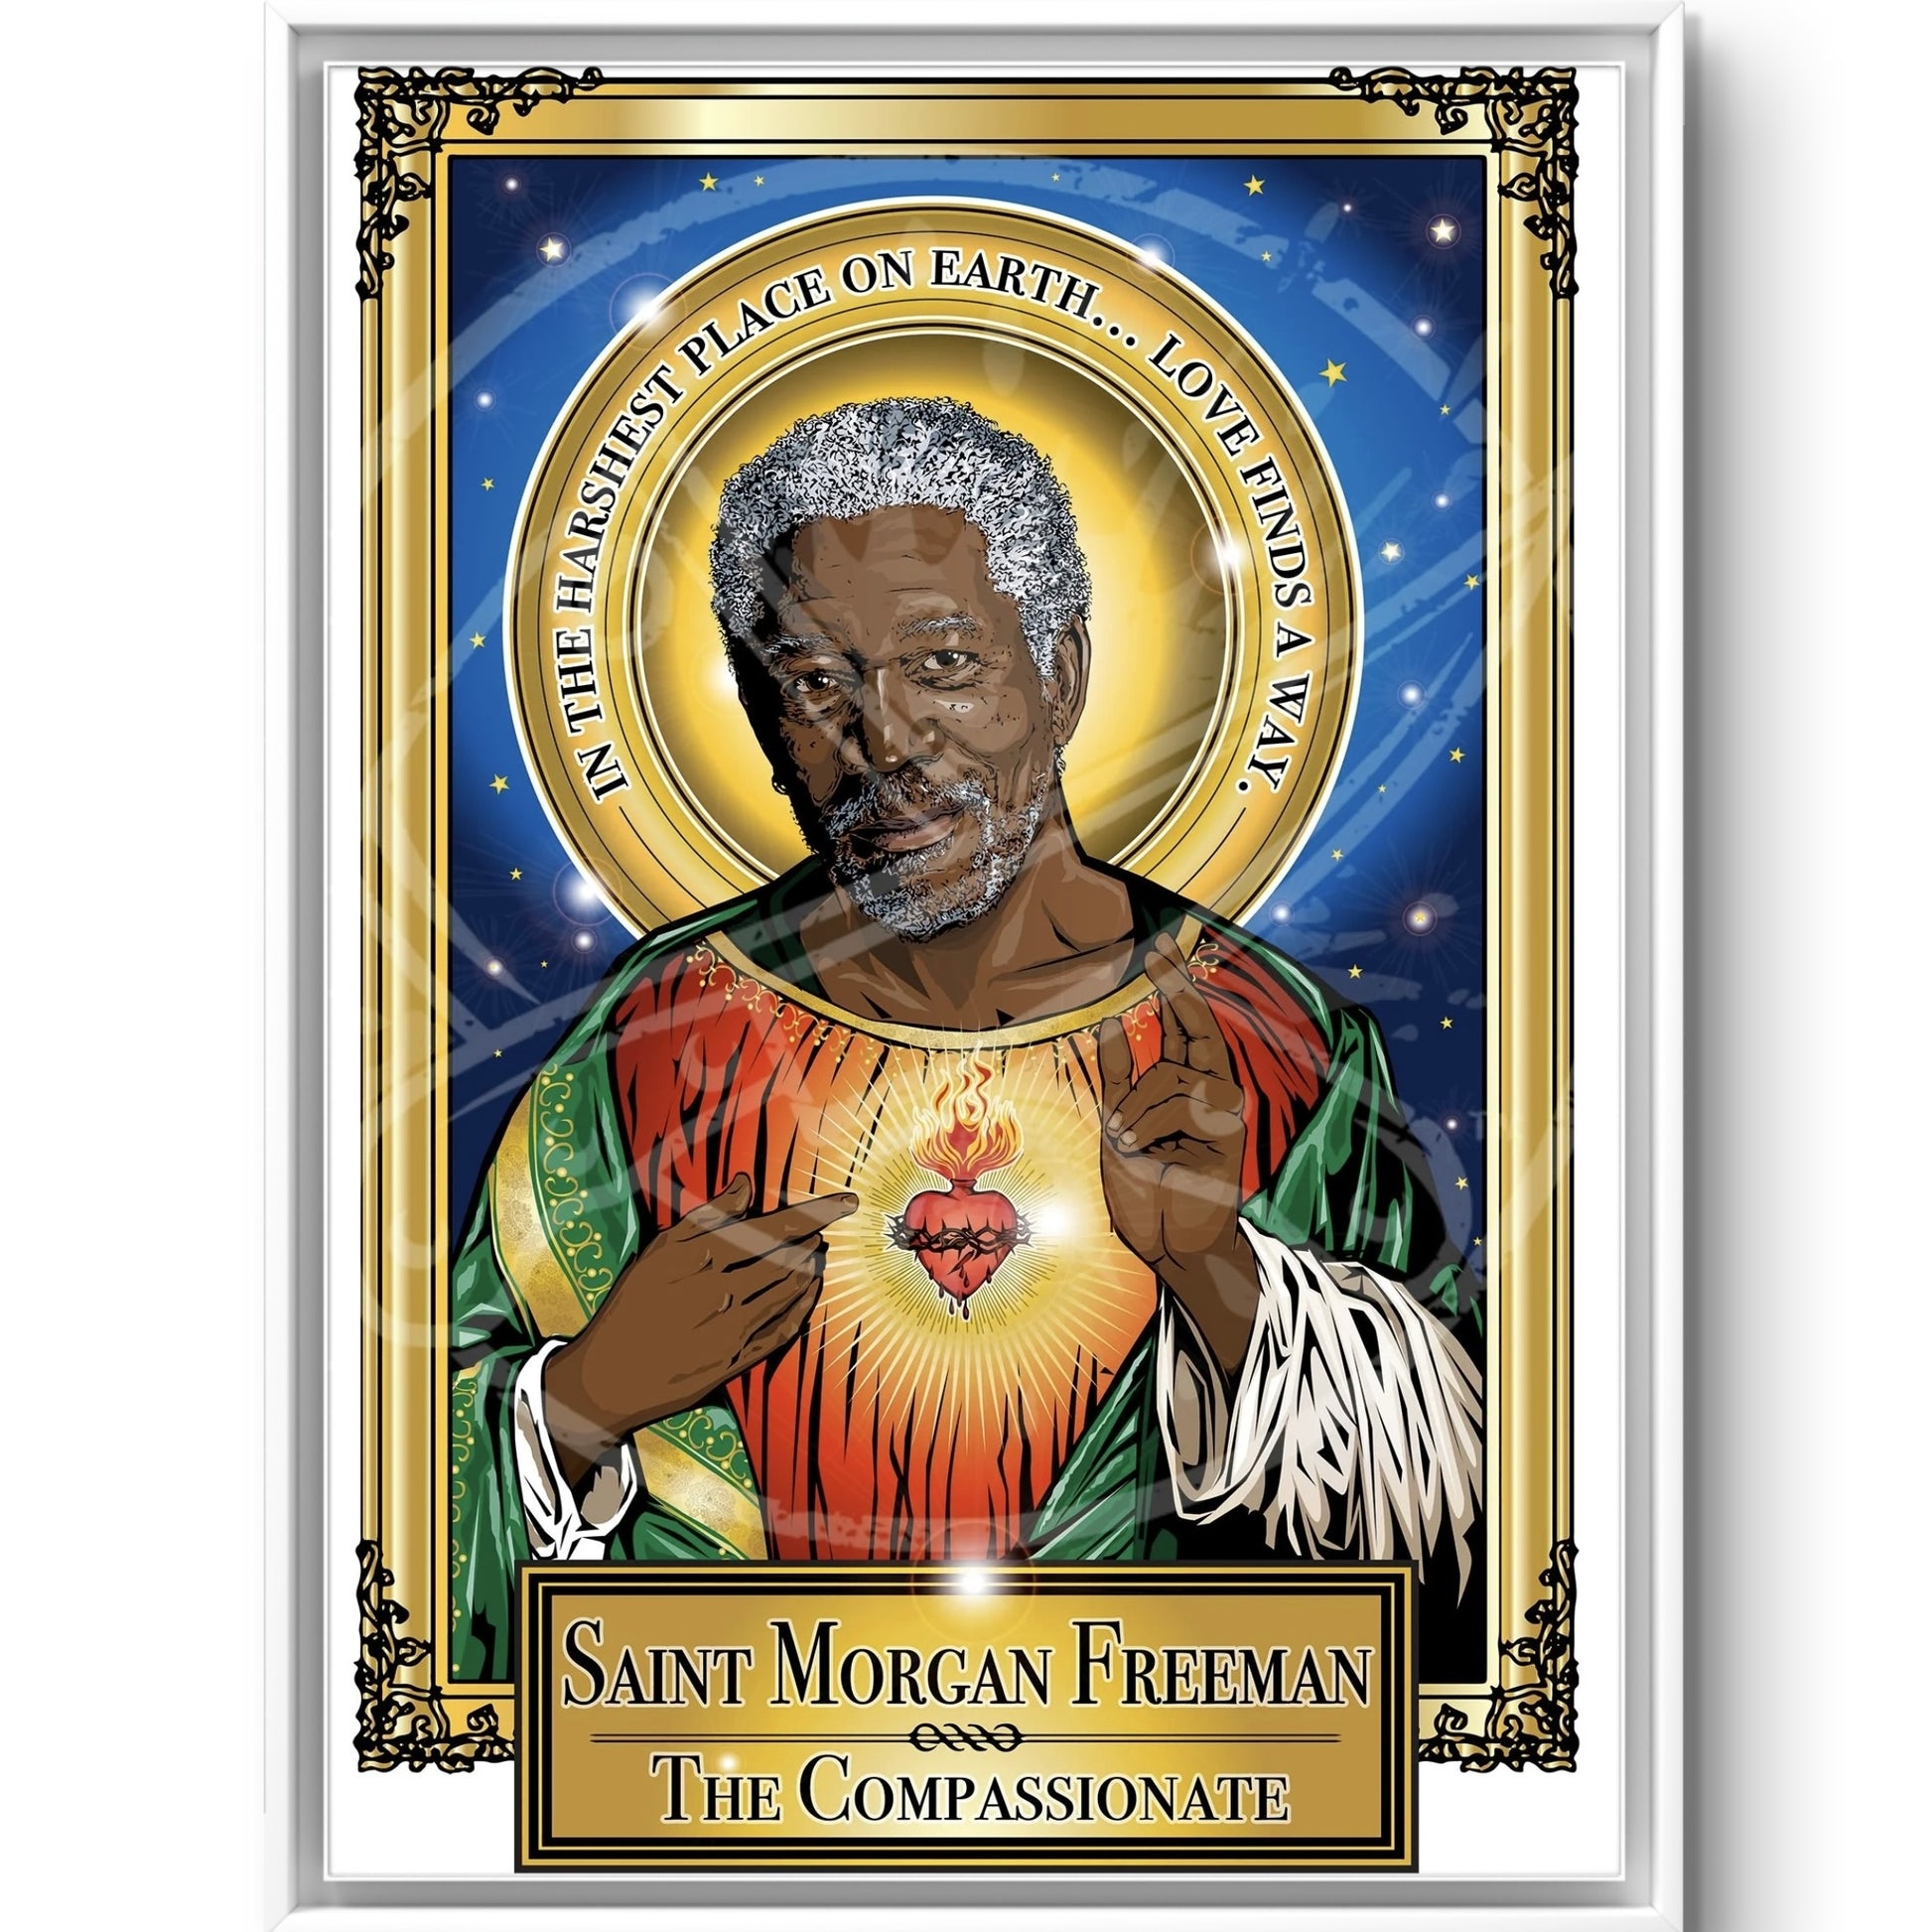 Saint Morgan Freeman The Compassionate Poster Cleaverandblade.com